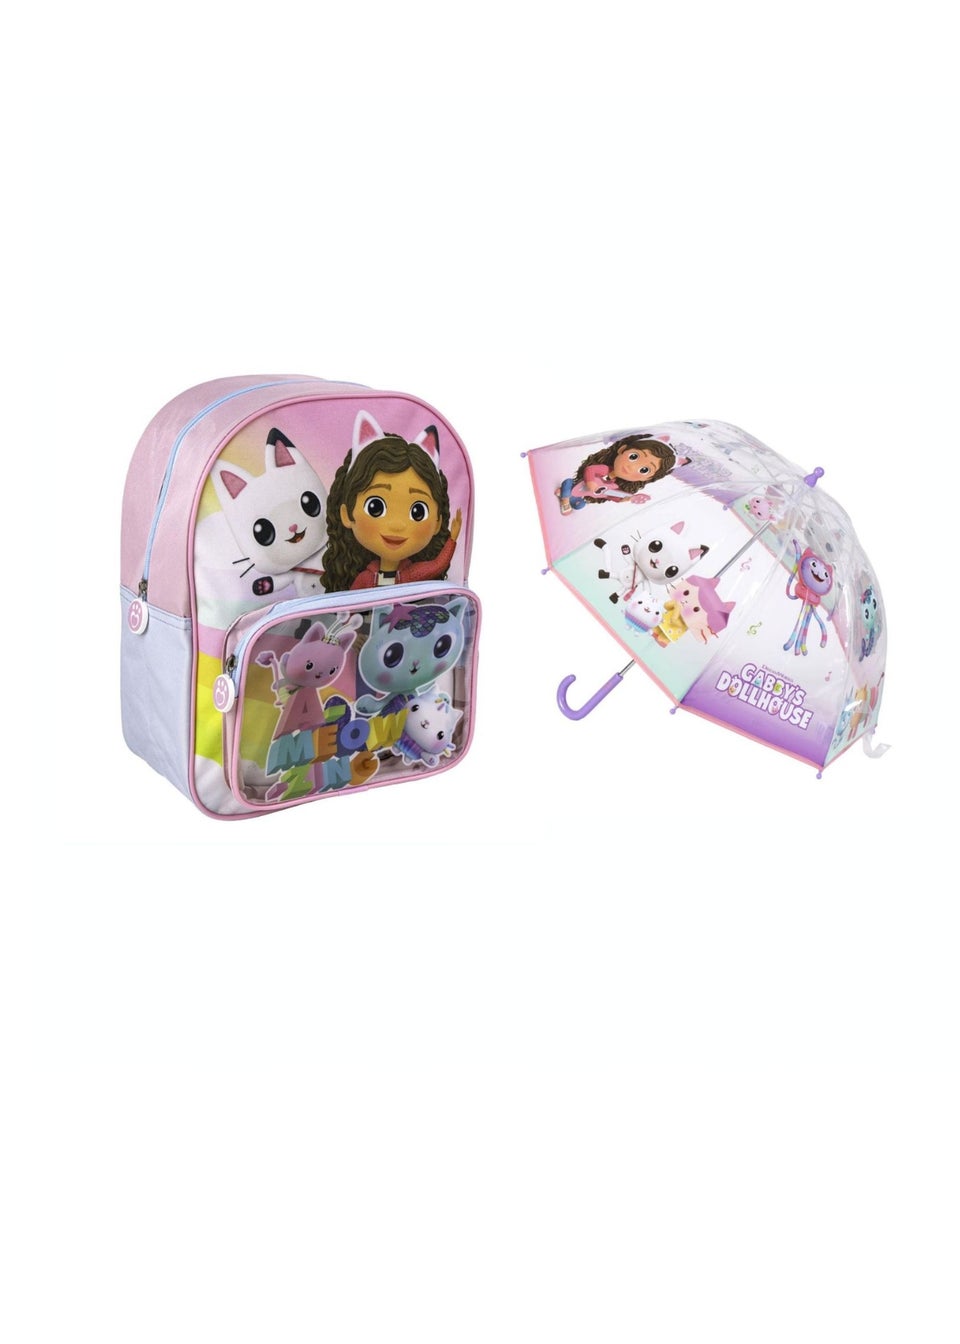 Dreamworks Pink Gabbys Doll House Backpack and Umbrella Set